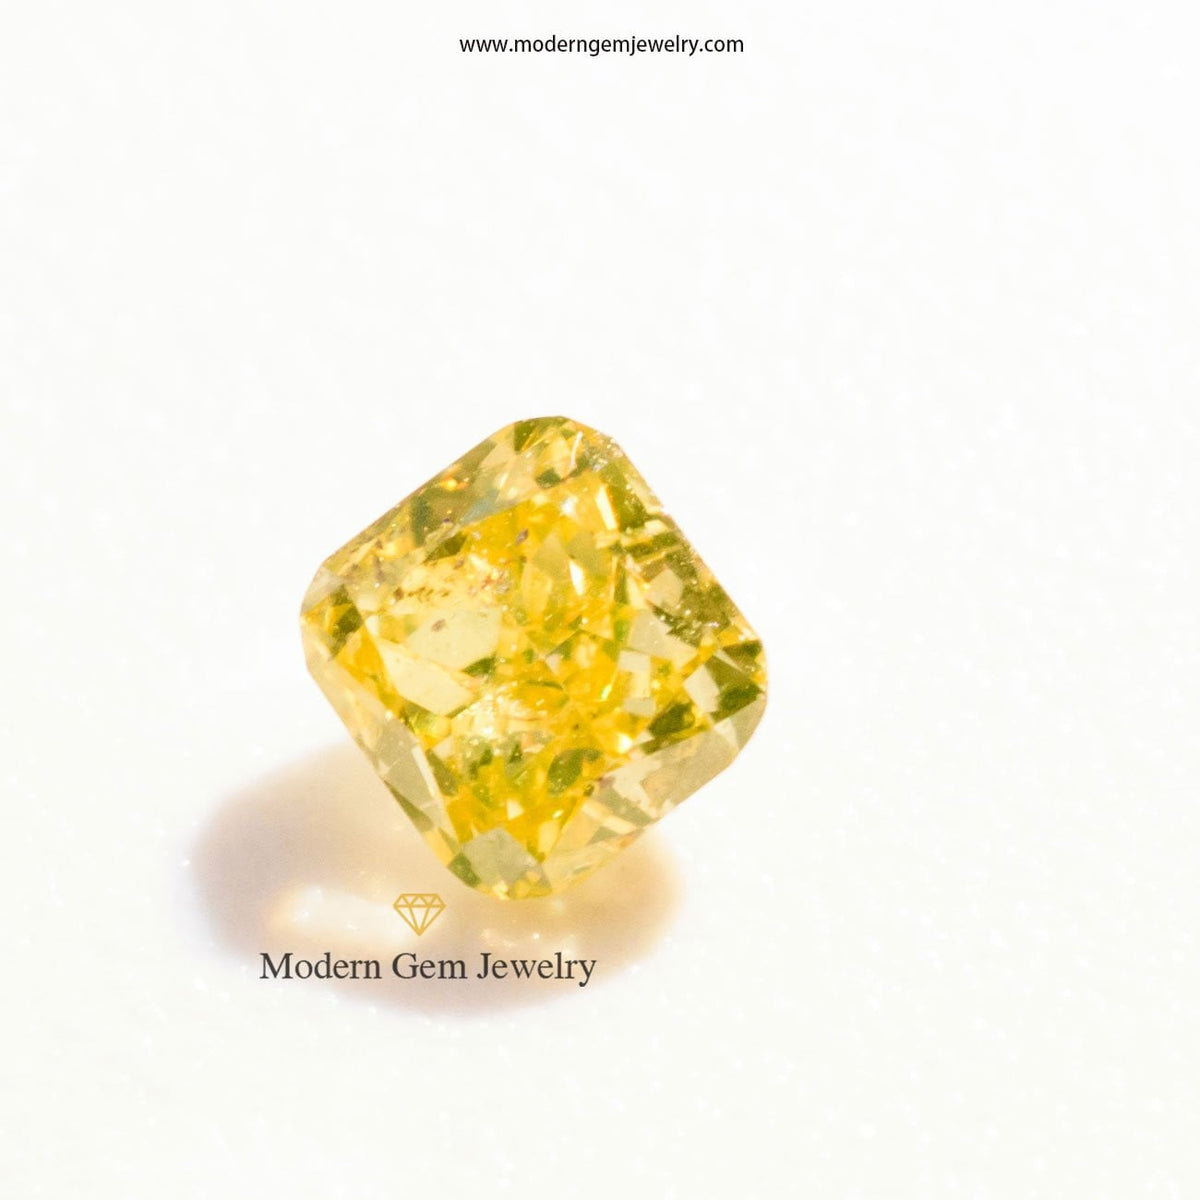 Yellow Cushion Cut Natural Diamond Loose Diamond Gemstone - Modern Gem Jewelry 